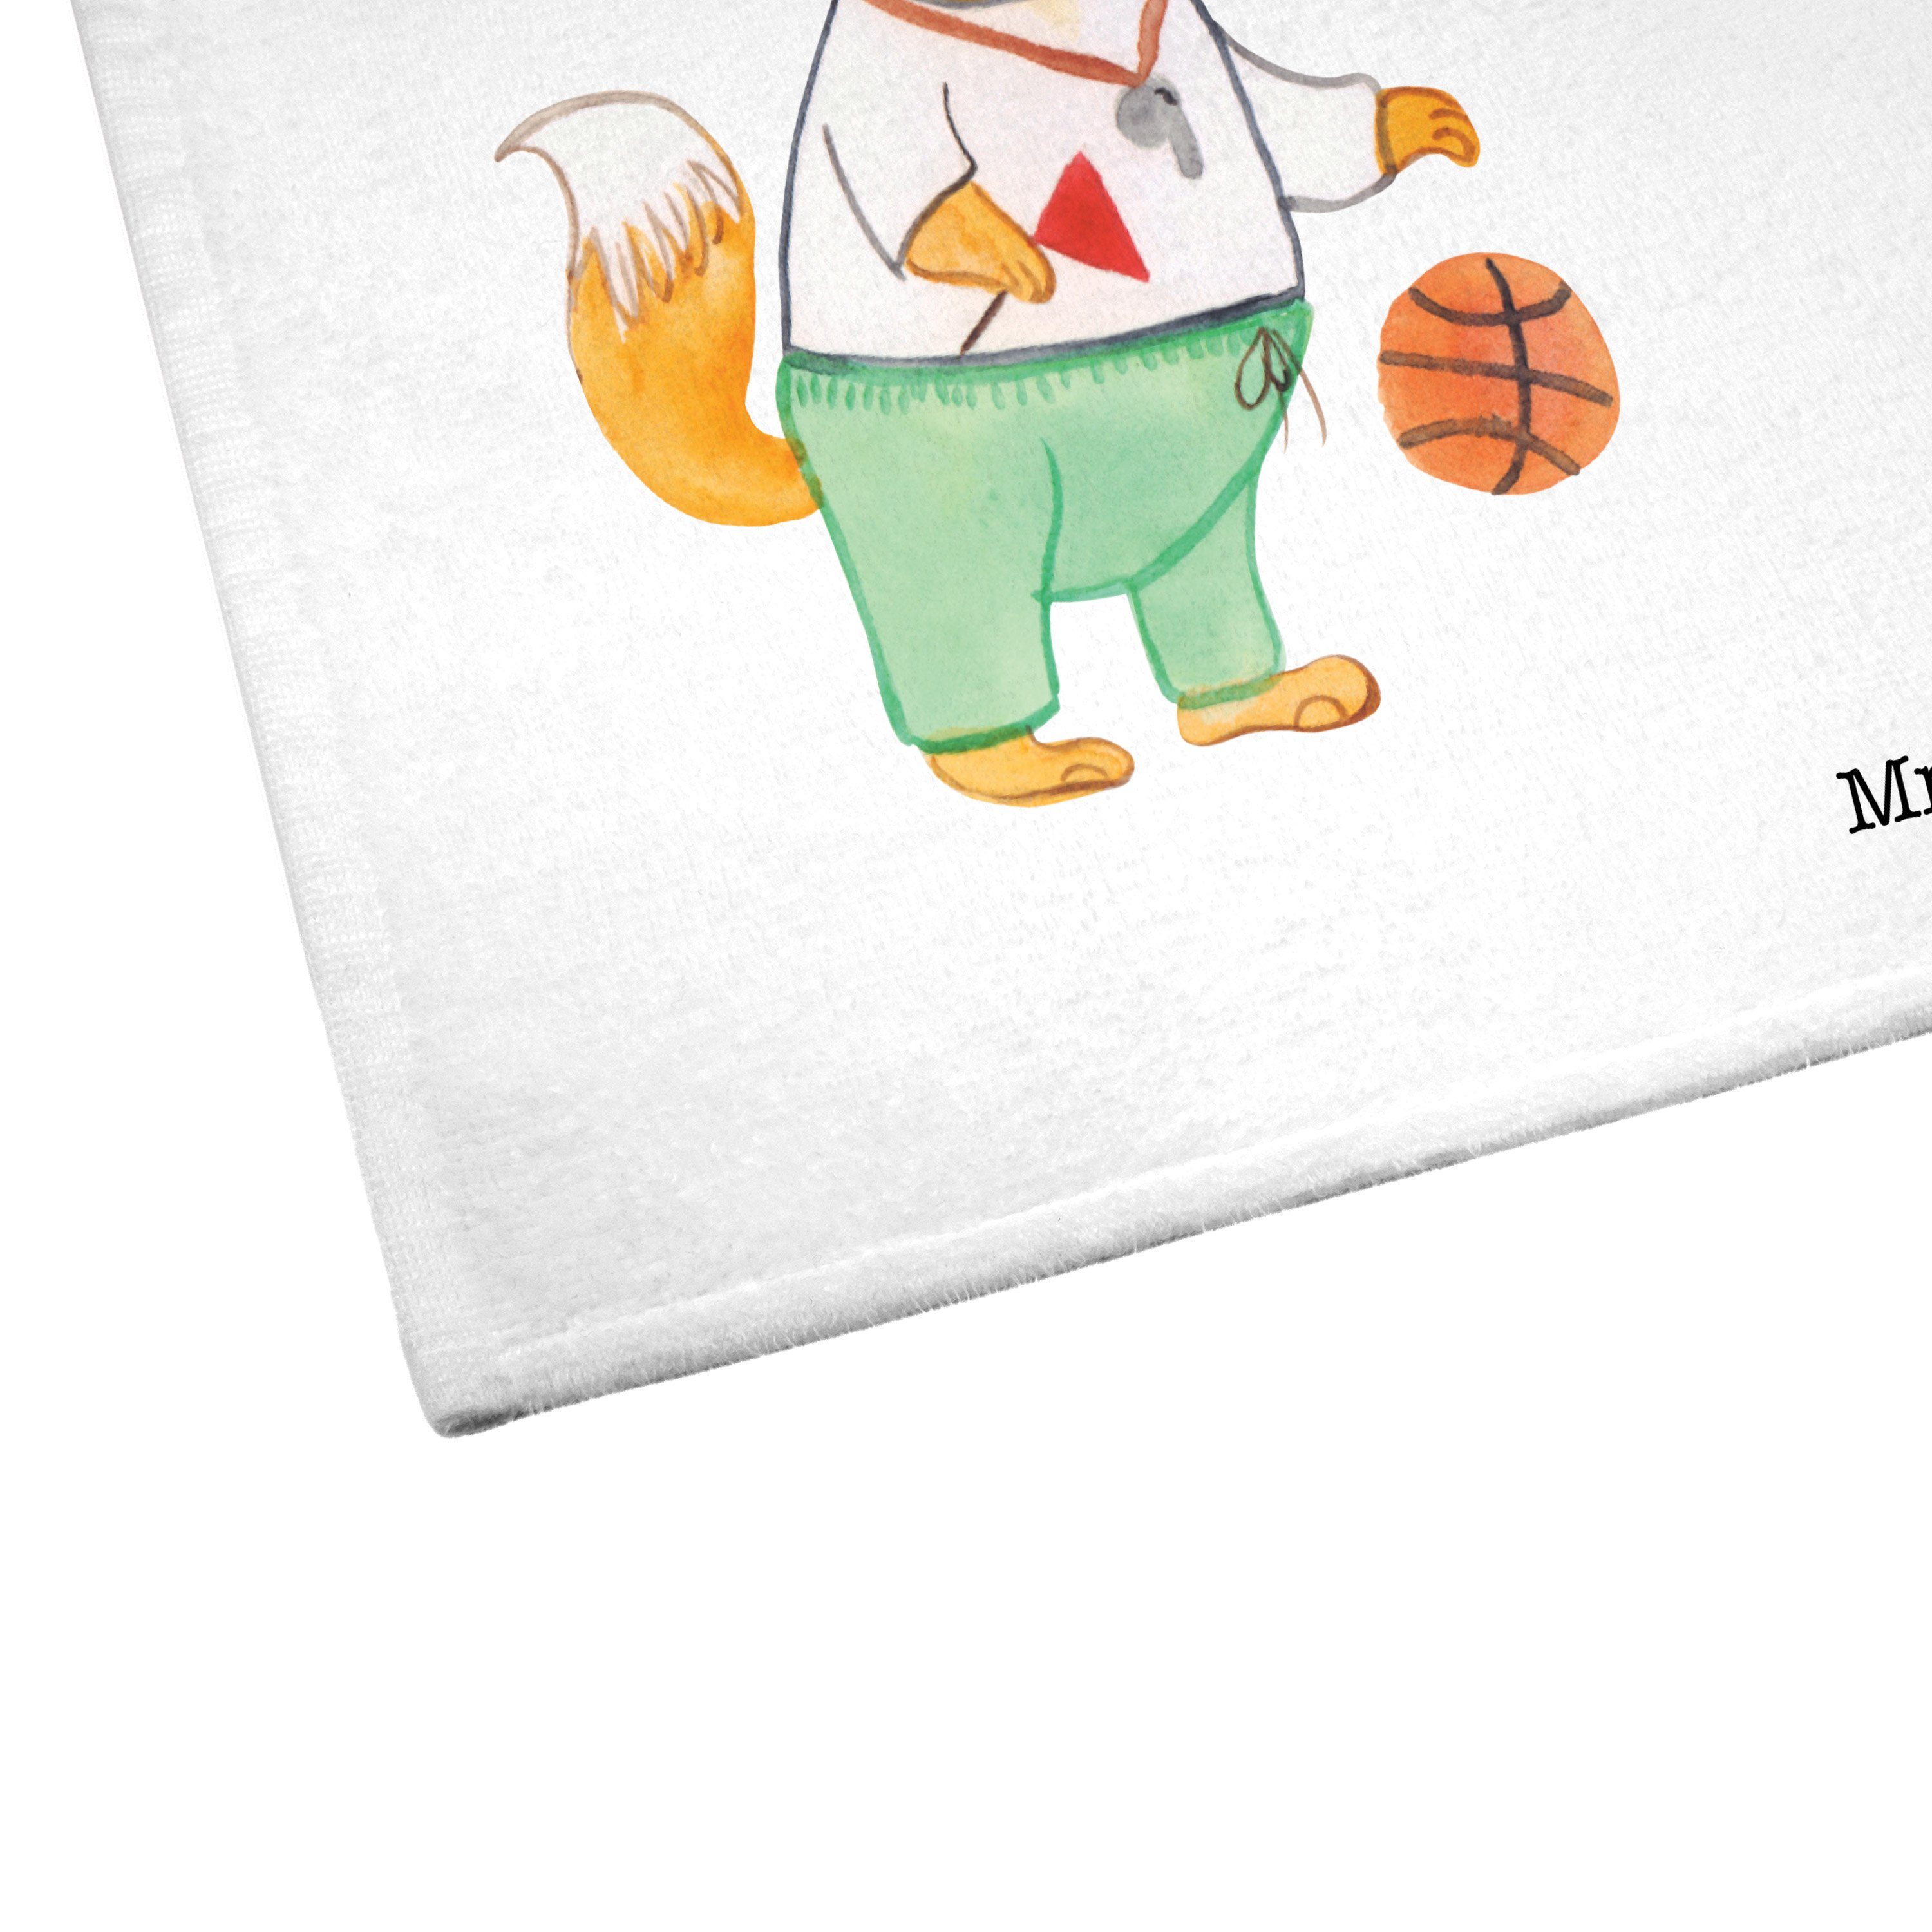 Mr. & Mrs. - Basketballtrainerin Rente, Geschenk, Handtuch (1-St) Panda Weiß Sport, aus Leidenschaft 